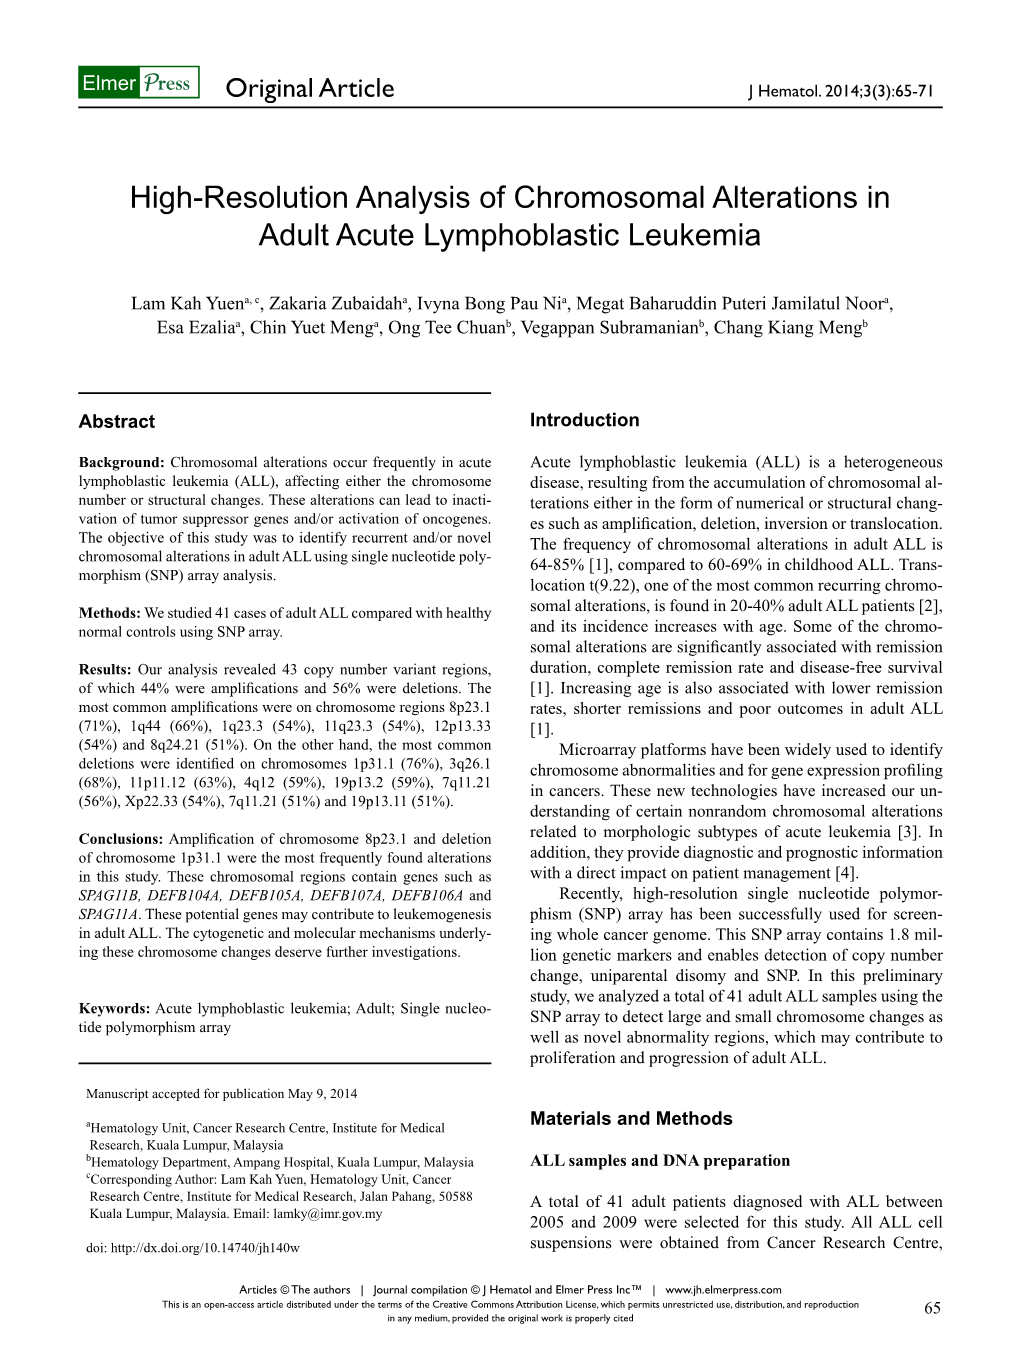 High-Resolution Analysis of Chromosomal Alterations in Adult Acute Lymphoblastic Leukemia